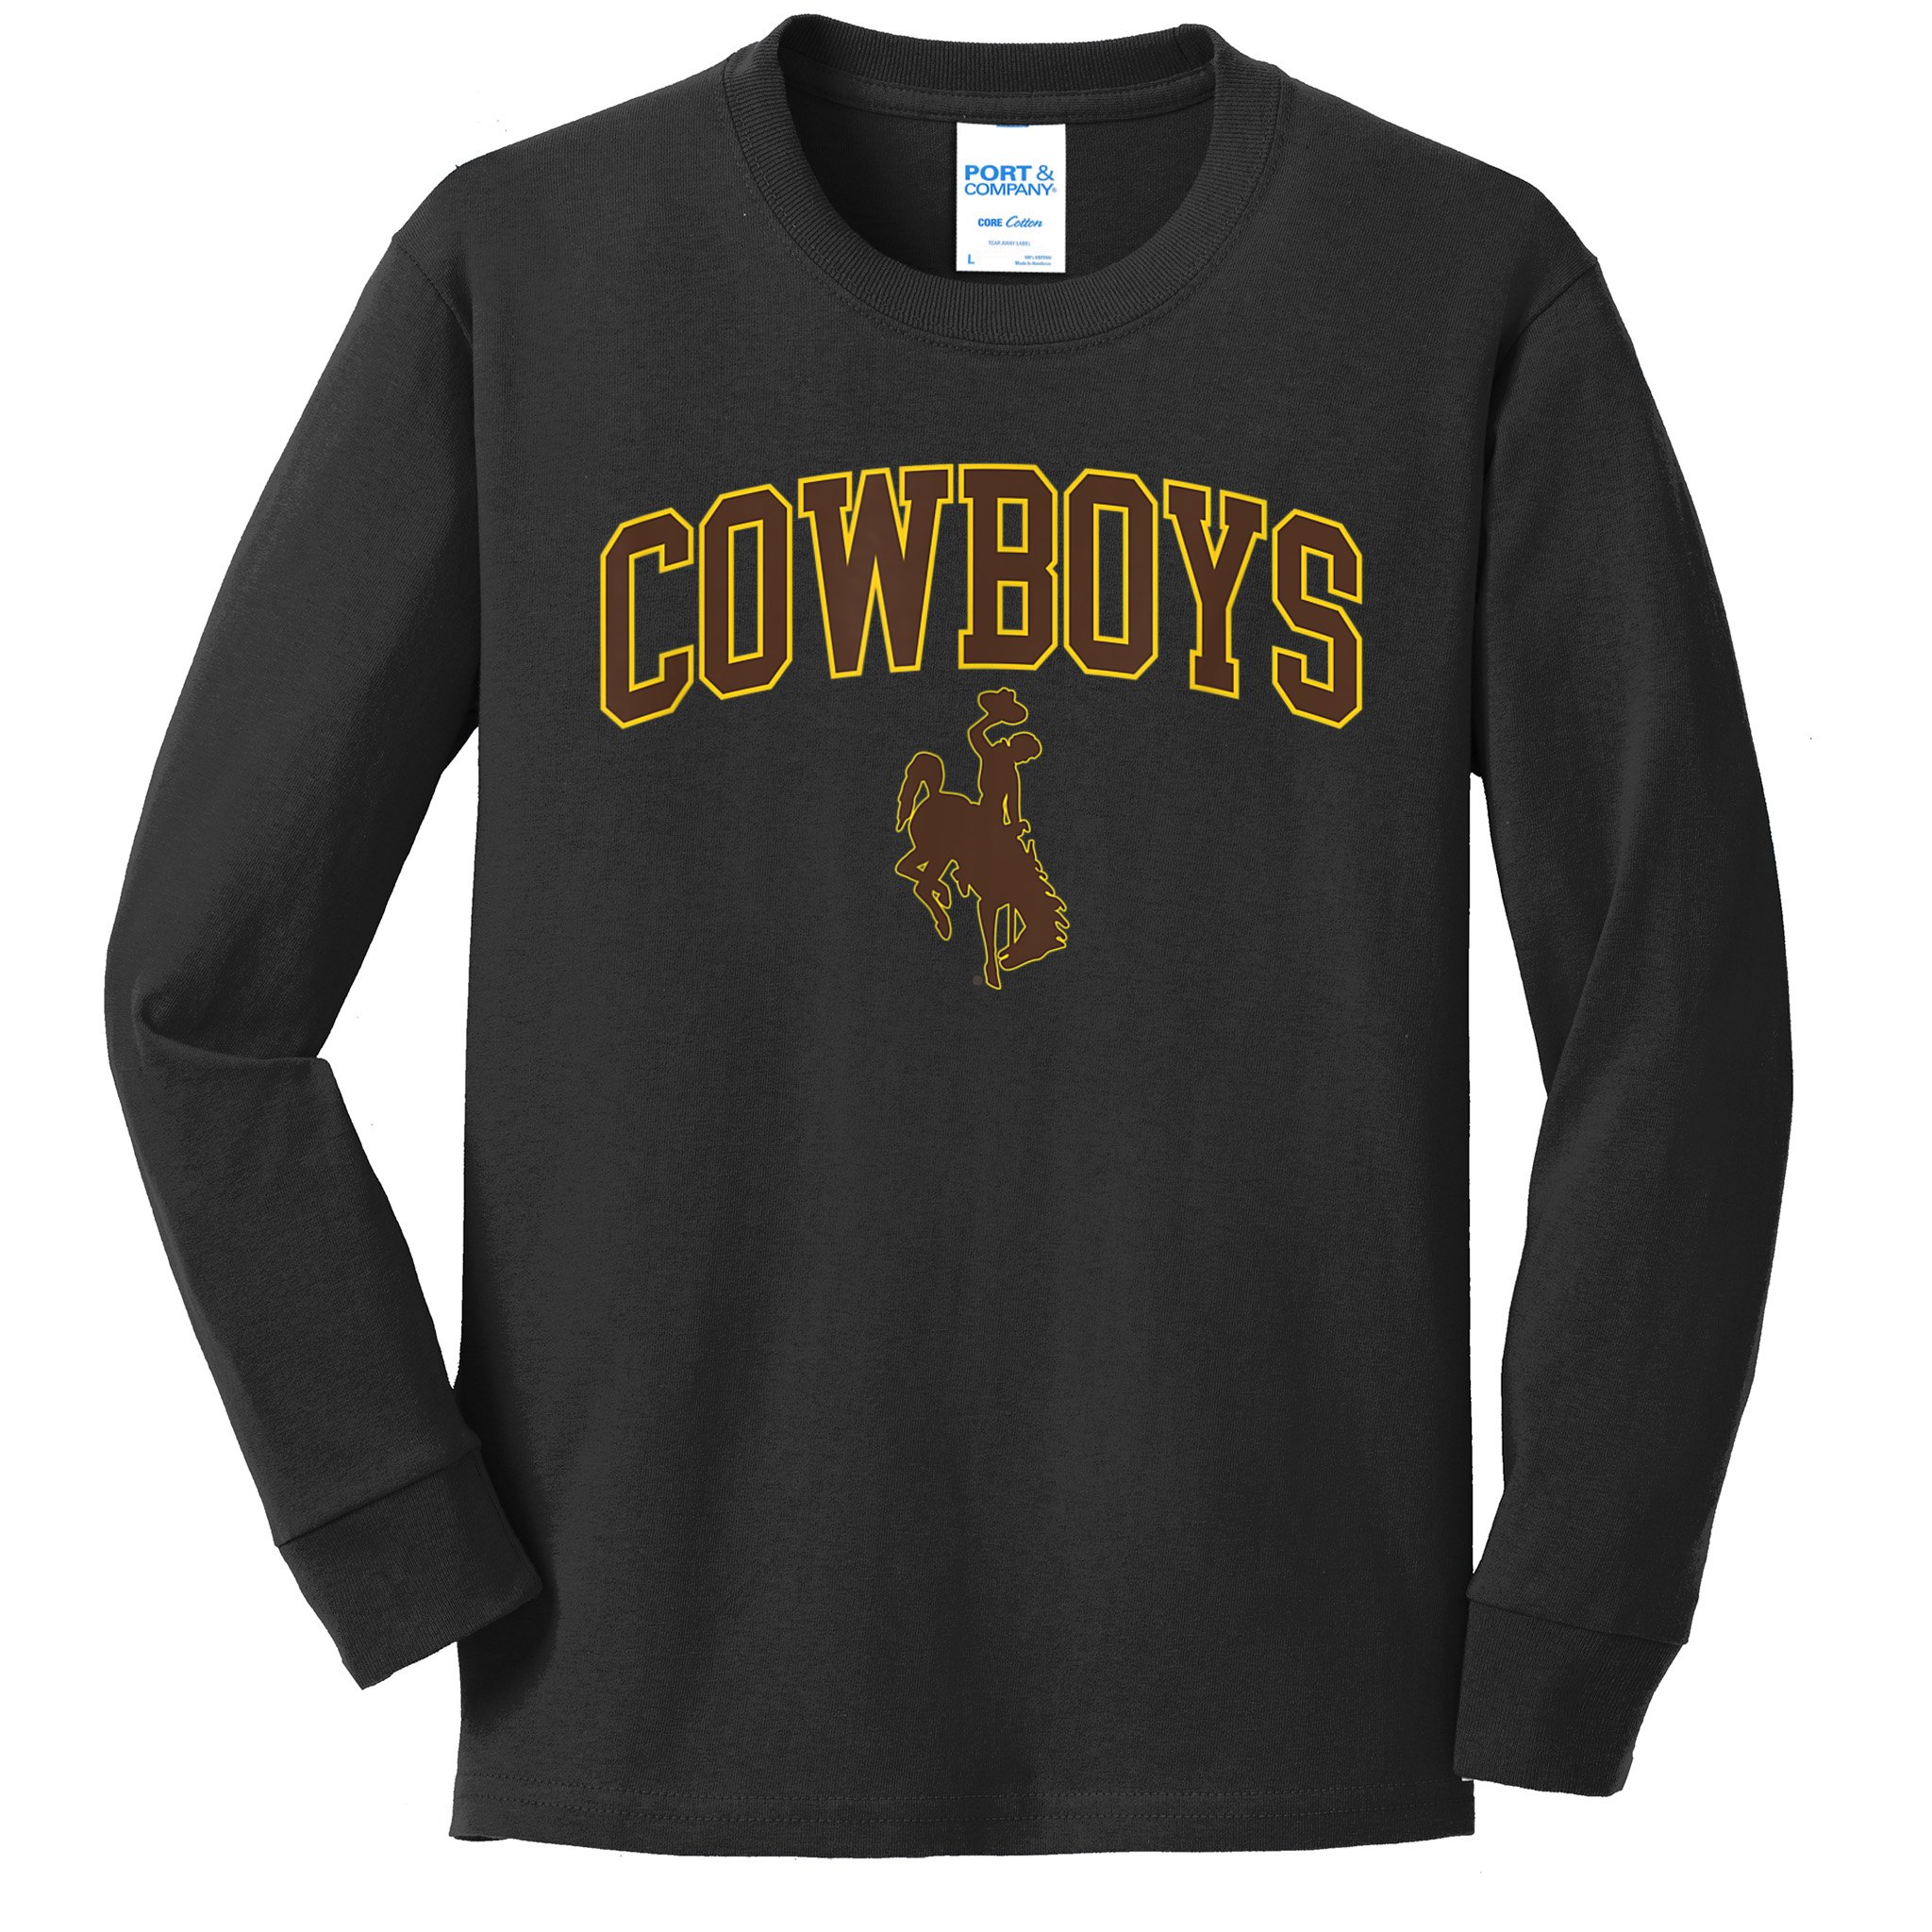 Nfl Dallas Cowboys Men's Big & Tall Long Sleeve Cotton Core T-shirt : Target